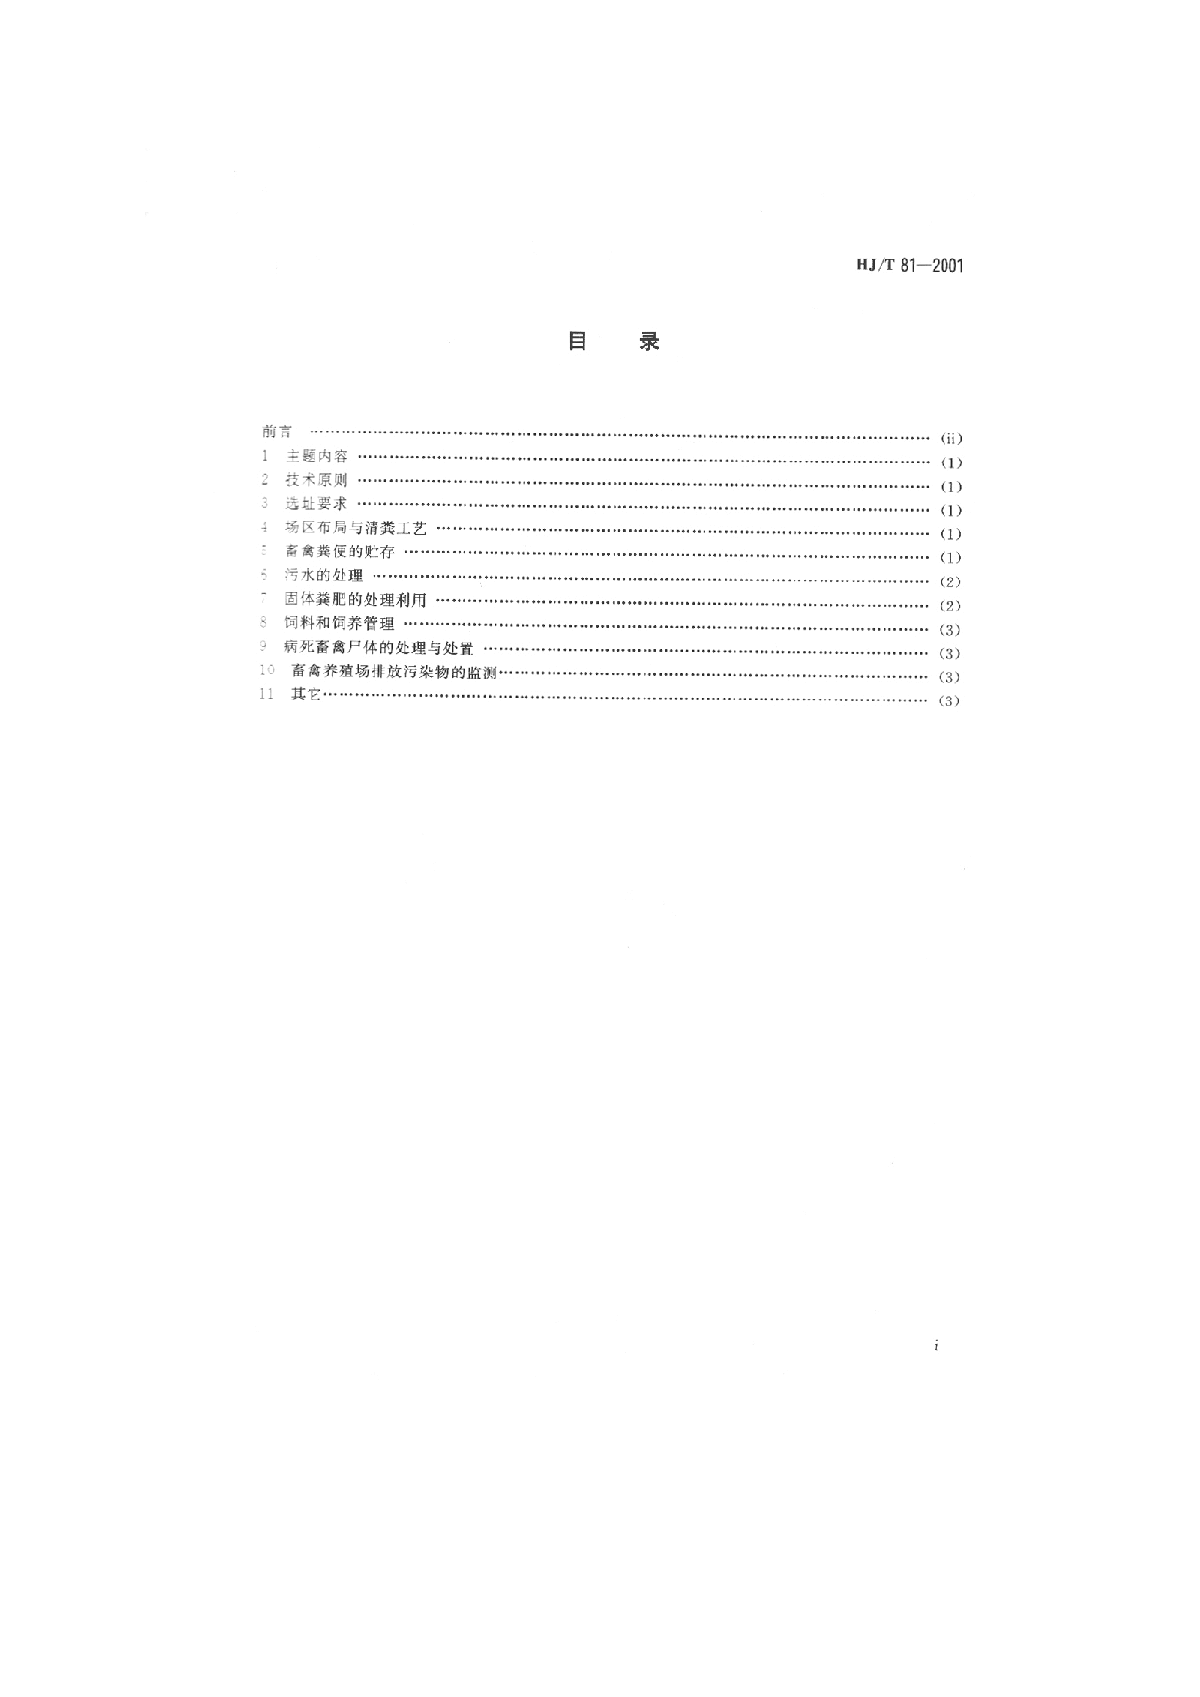 HJ_T 81-2001 畜禽养殖业污染防治技术规范-图二